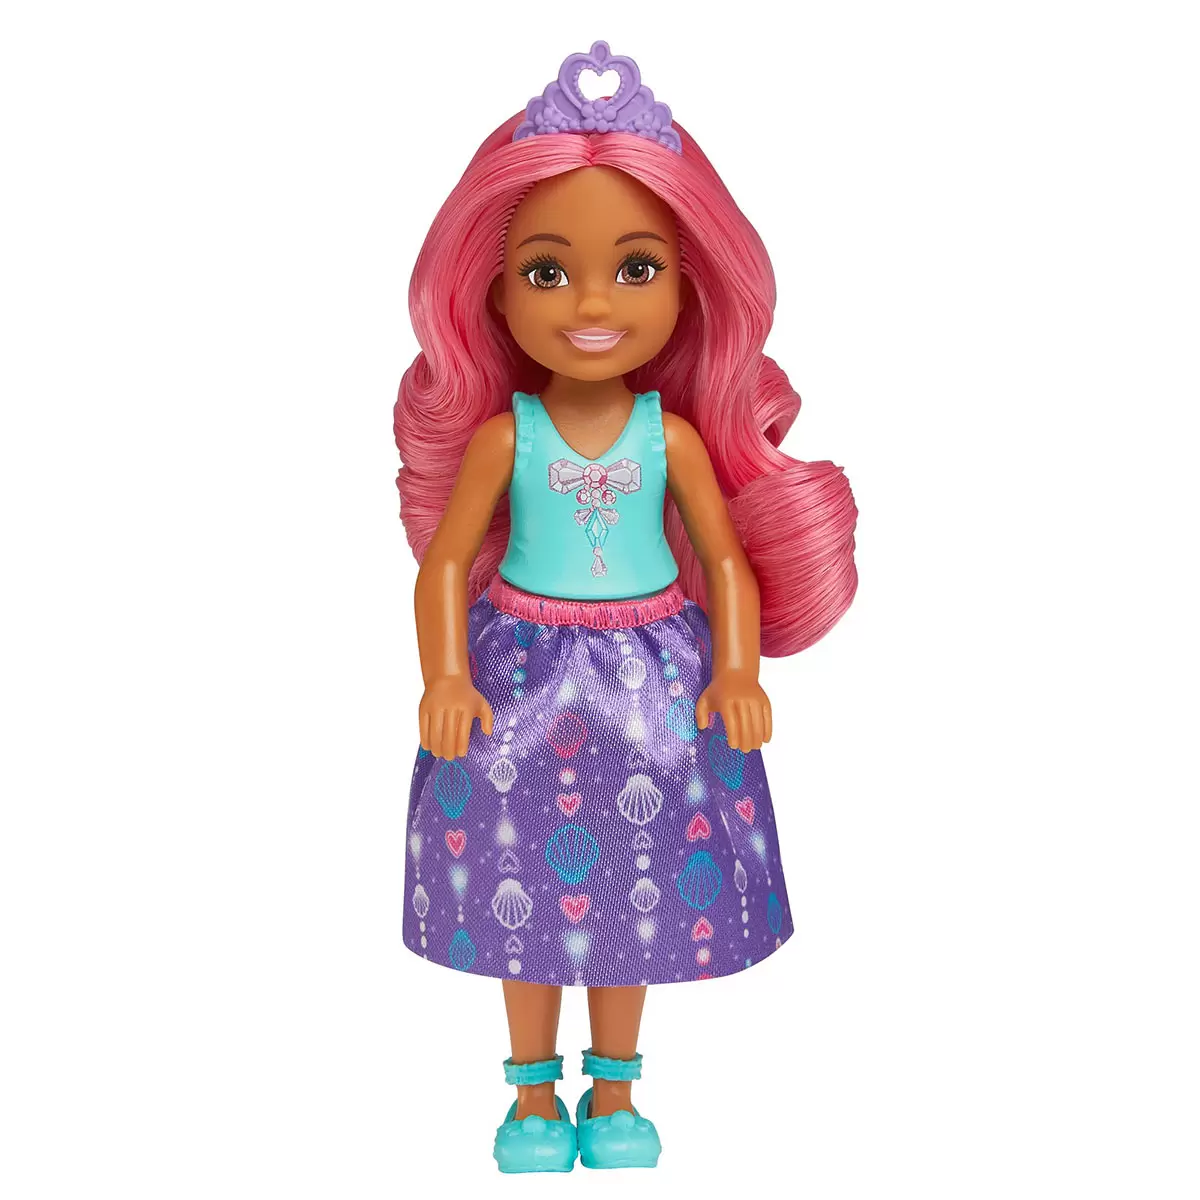 Buy Barbie Fairytale Story Set Item4 Image at Costco.co.uk